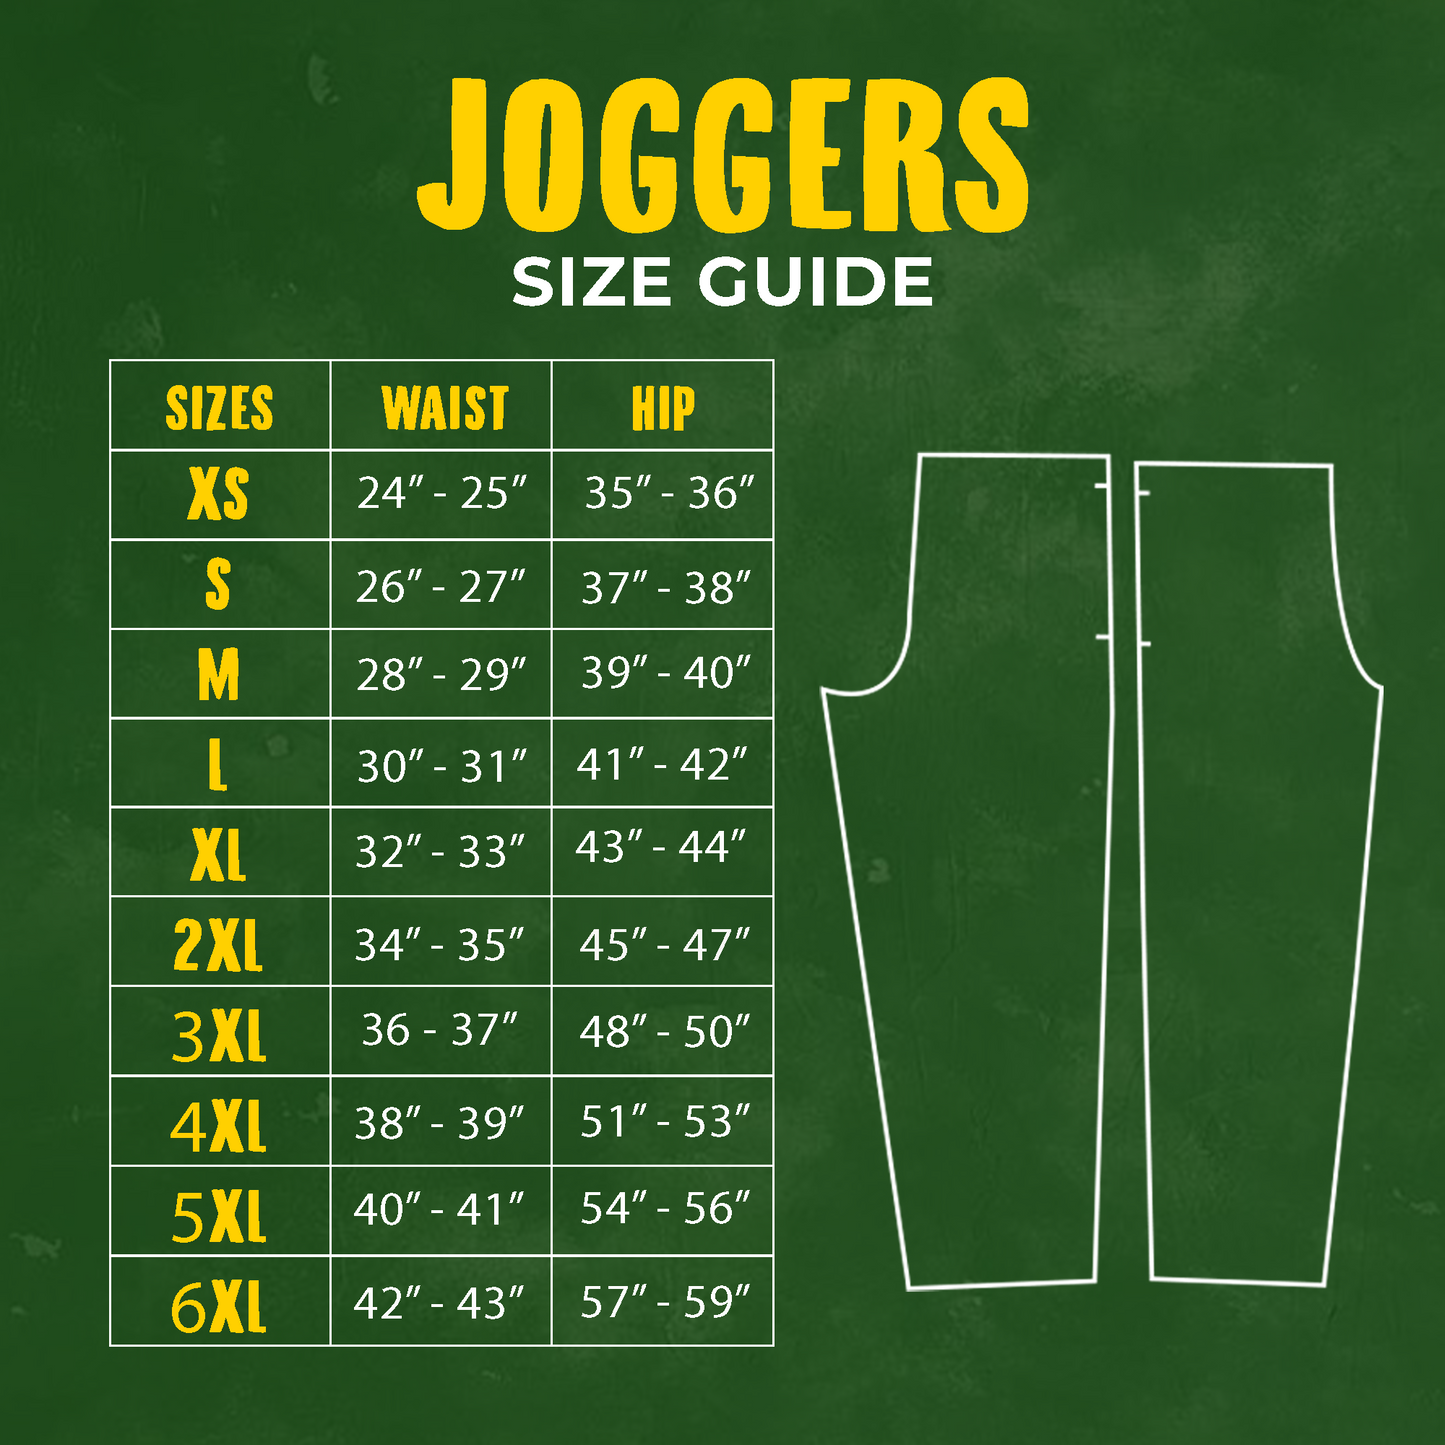 z | SQ002: Joggers PDF Sewing Pattern  (w/ Pockets + Elastic Waistband)